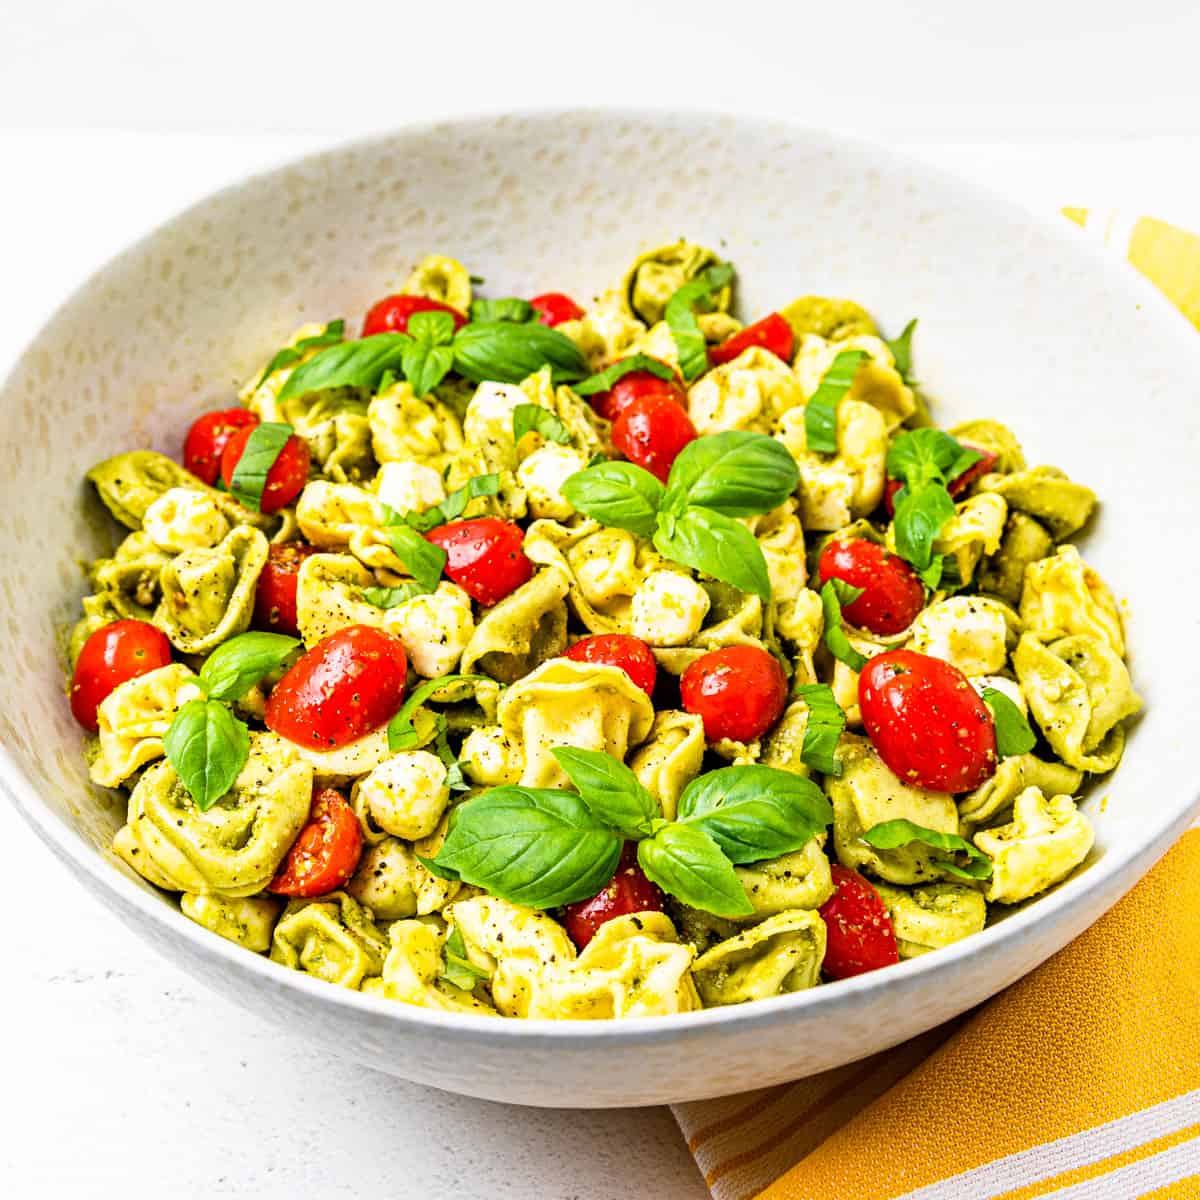 Pesto pasta salad in a large serving bowl.